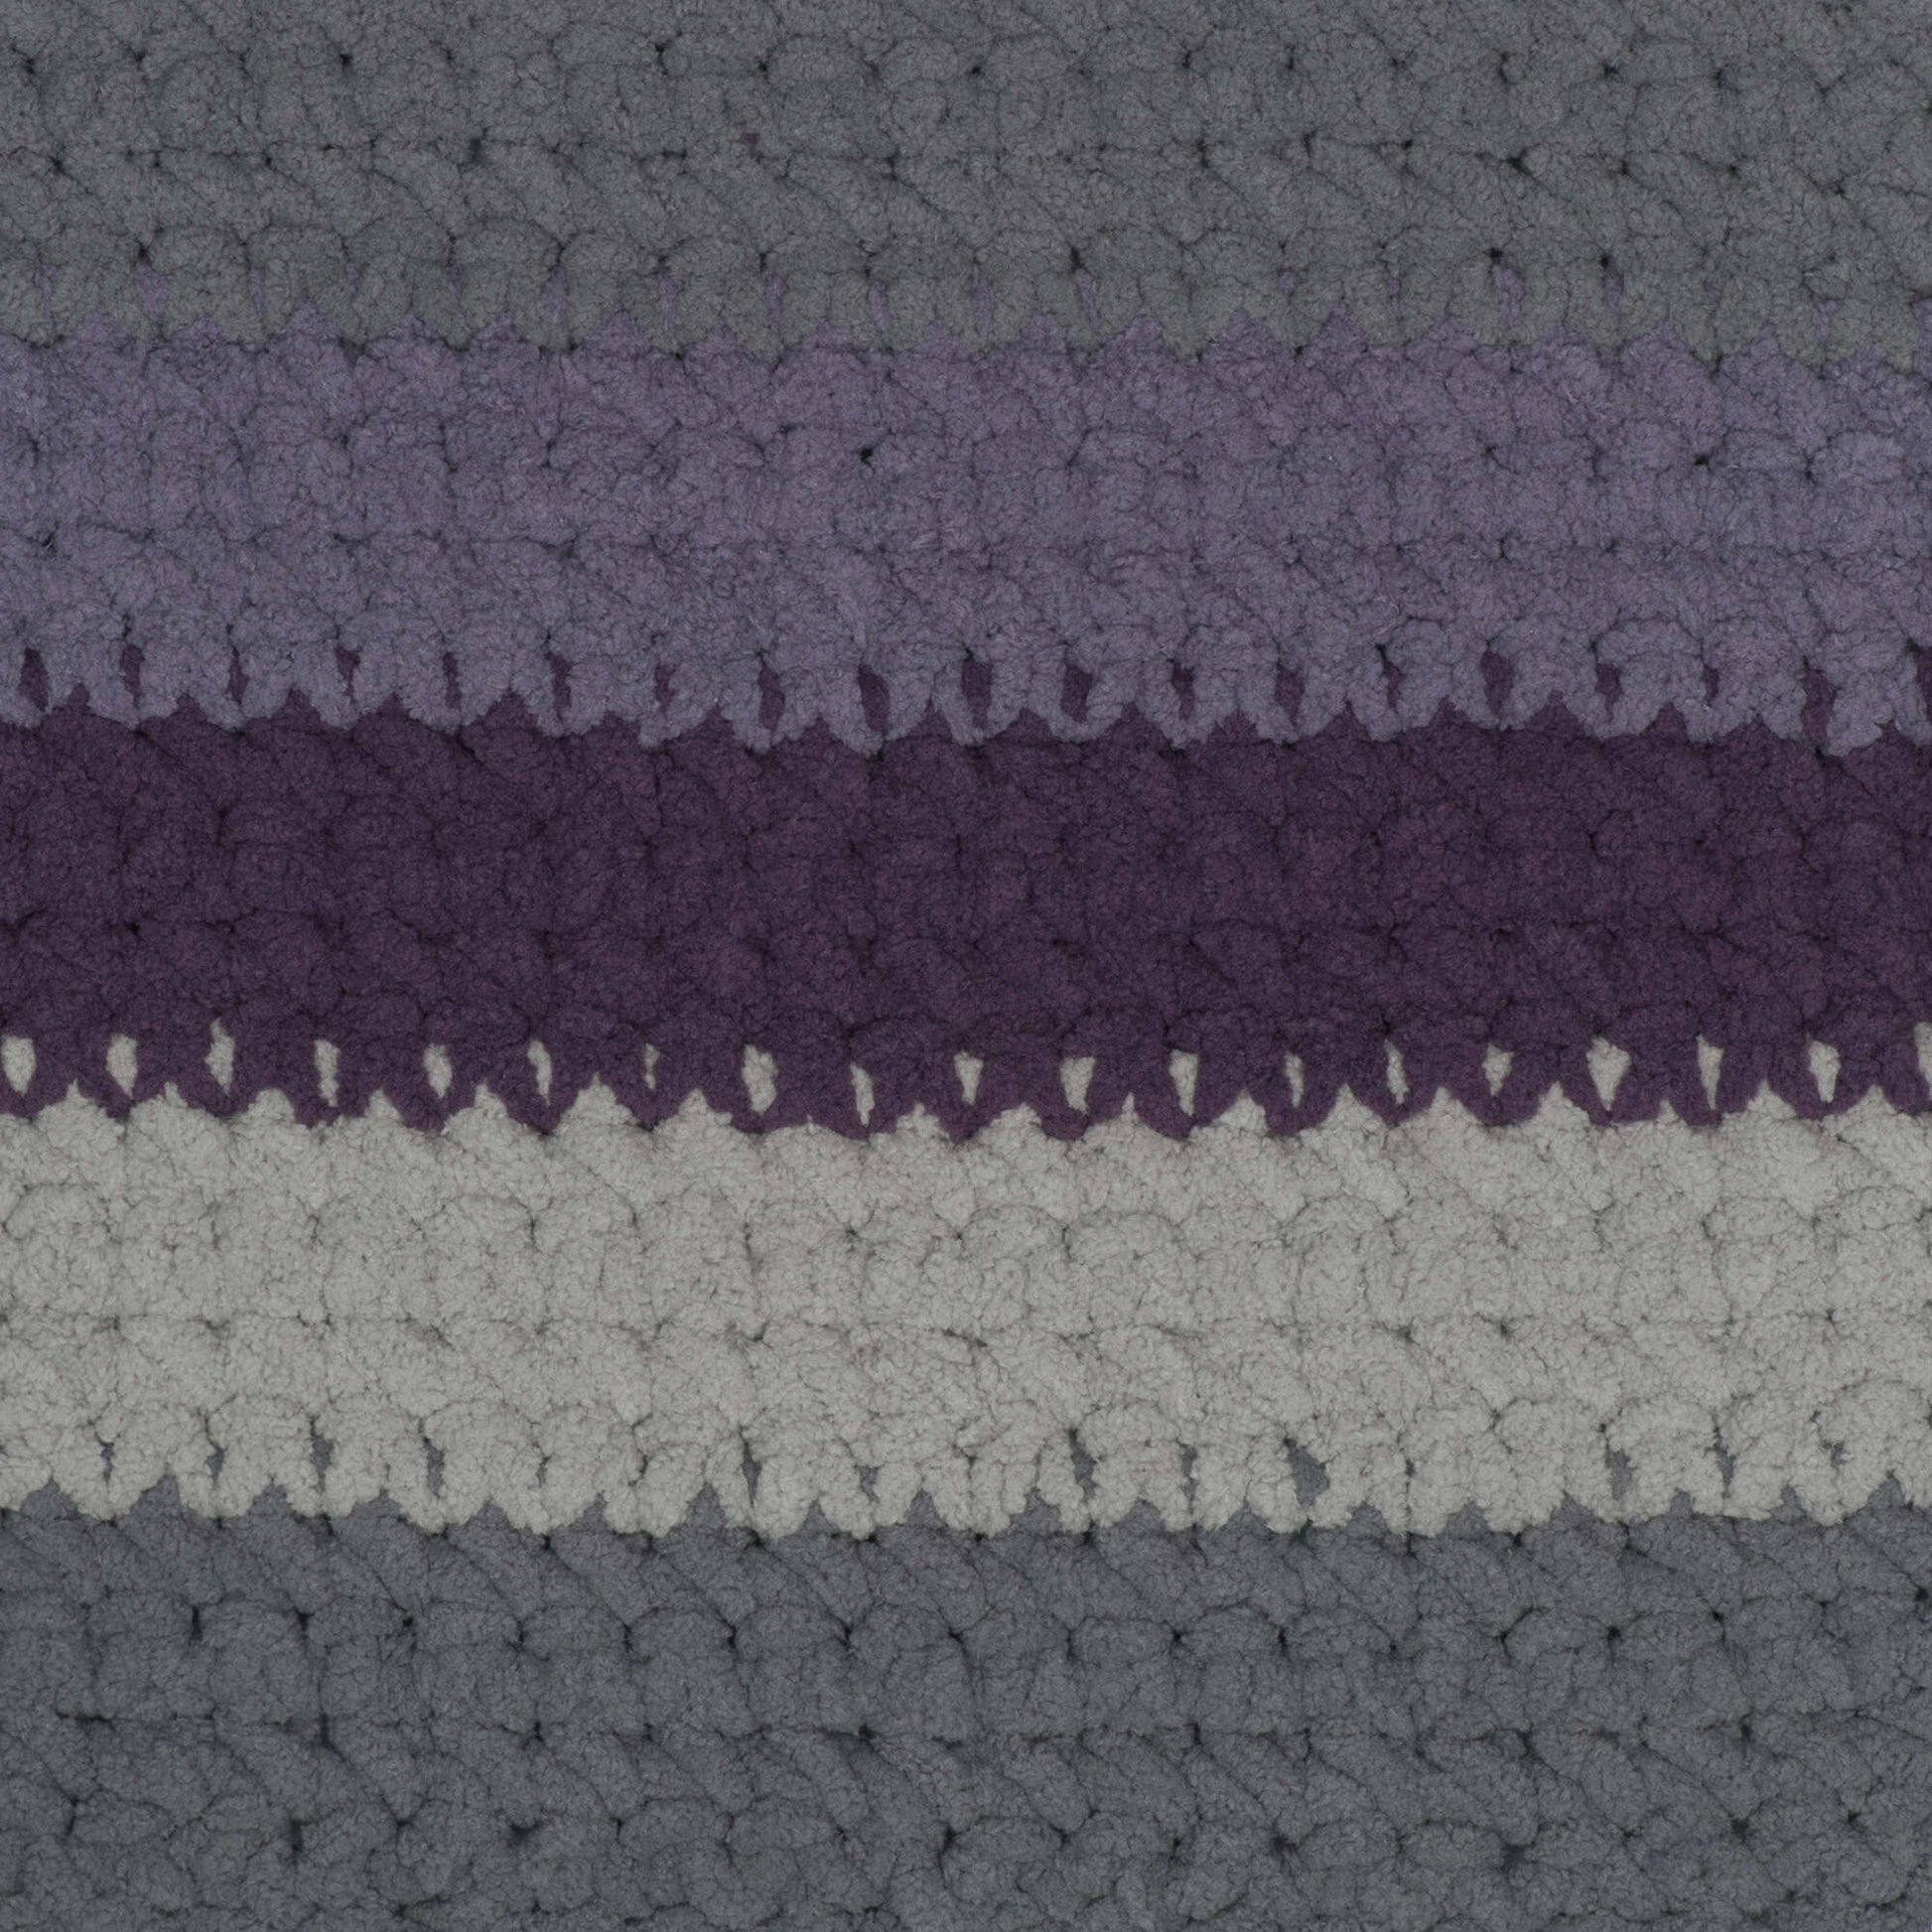 Bernat Blanket Stripes Yarn (300g/10.5oz) - Clearance Shades